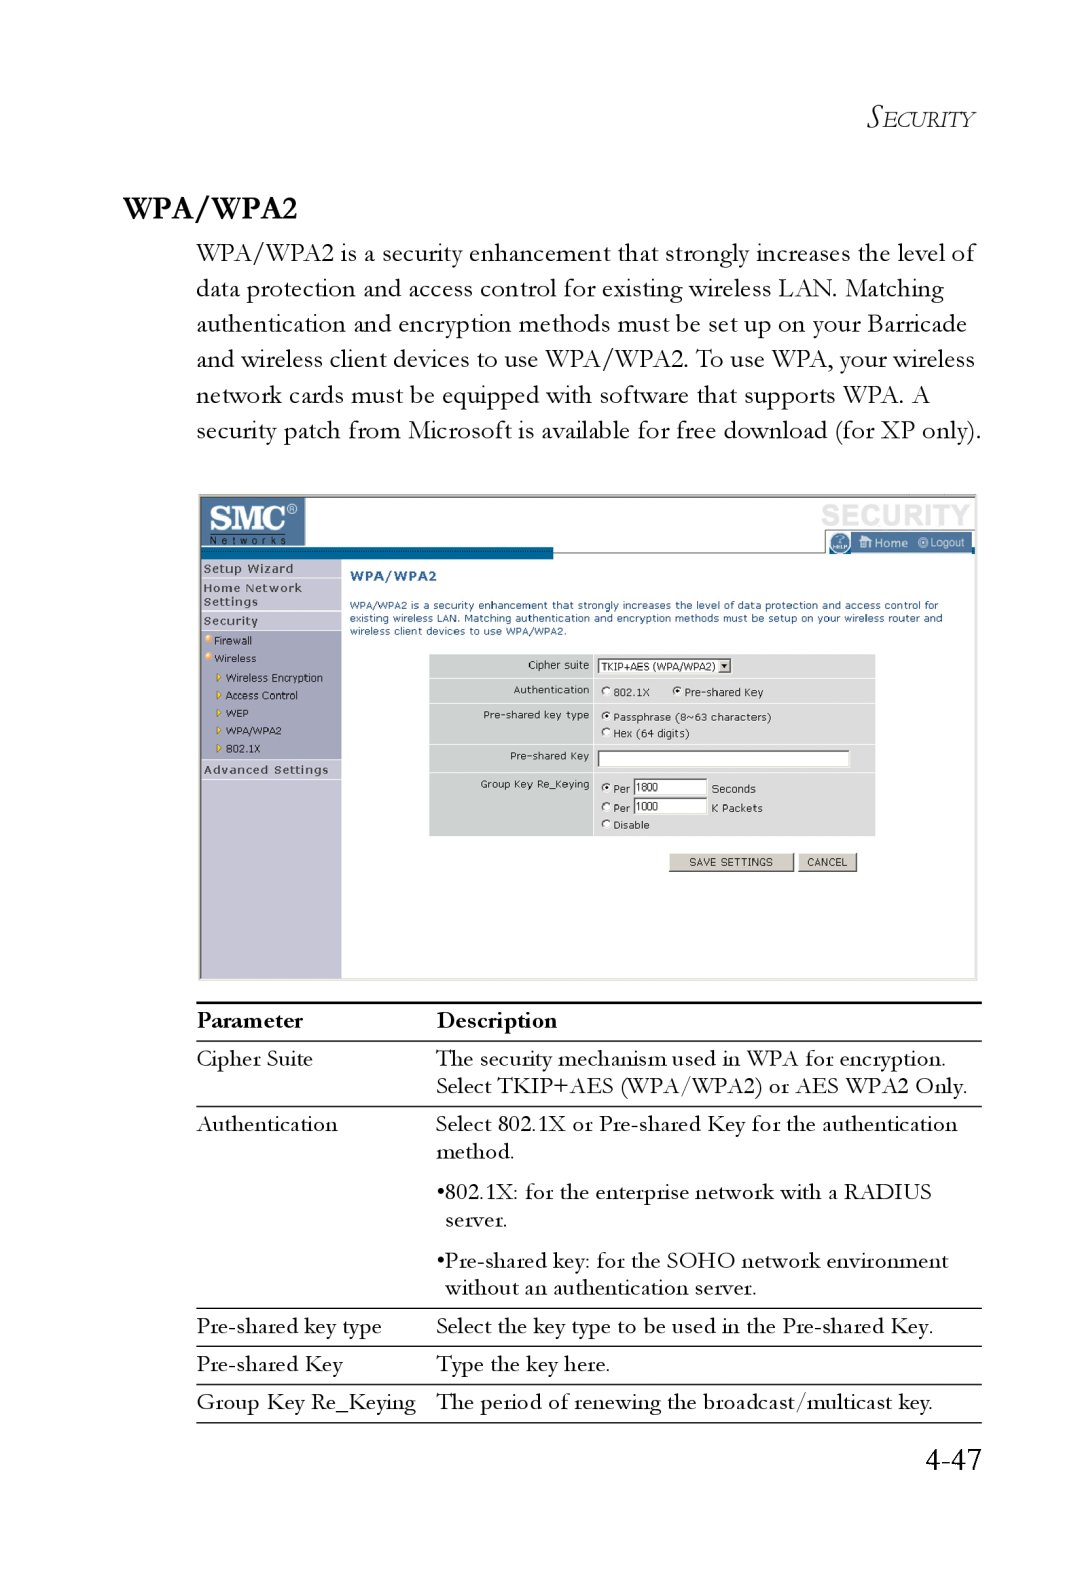 SMC Networks SMCWBR14T-G manual 4-47, WPA/WPA2 